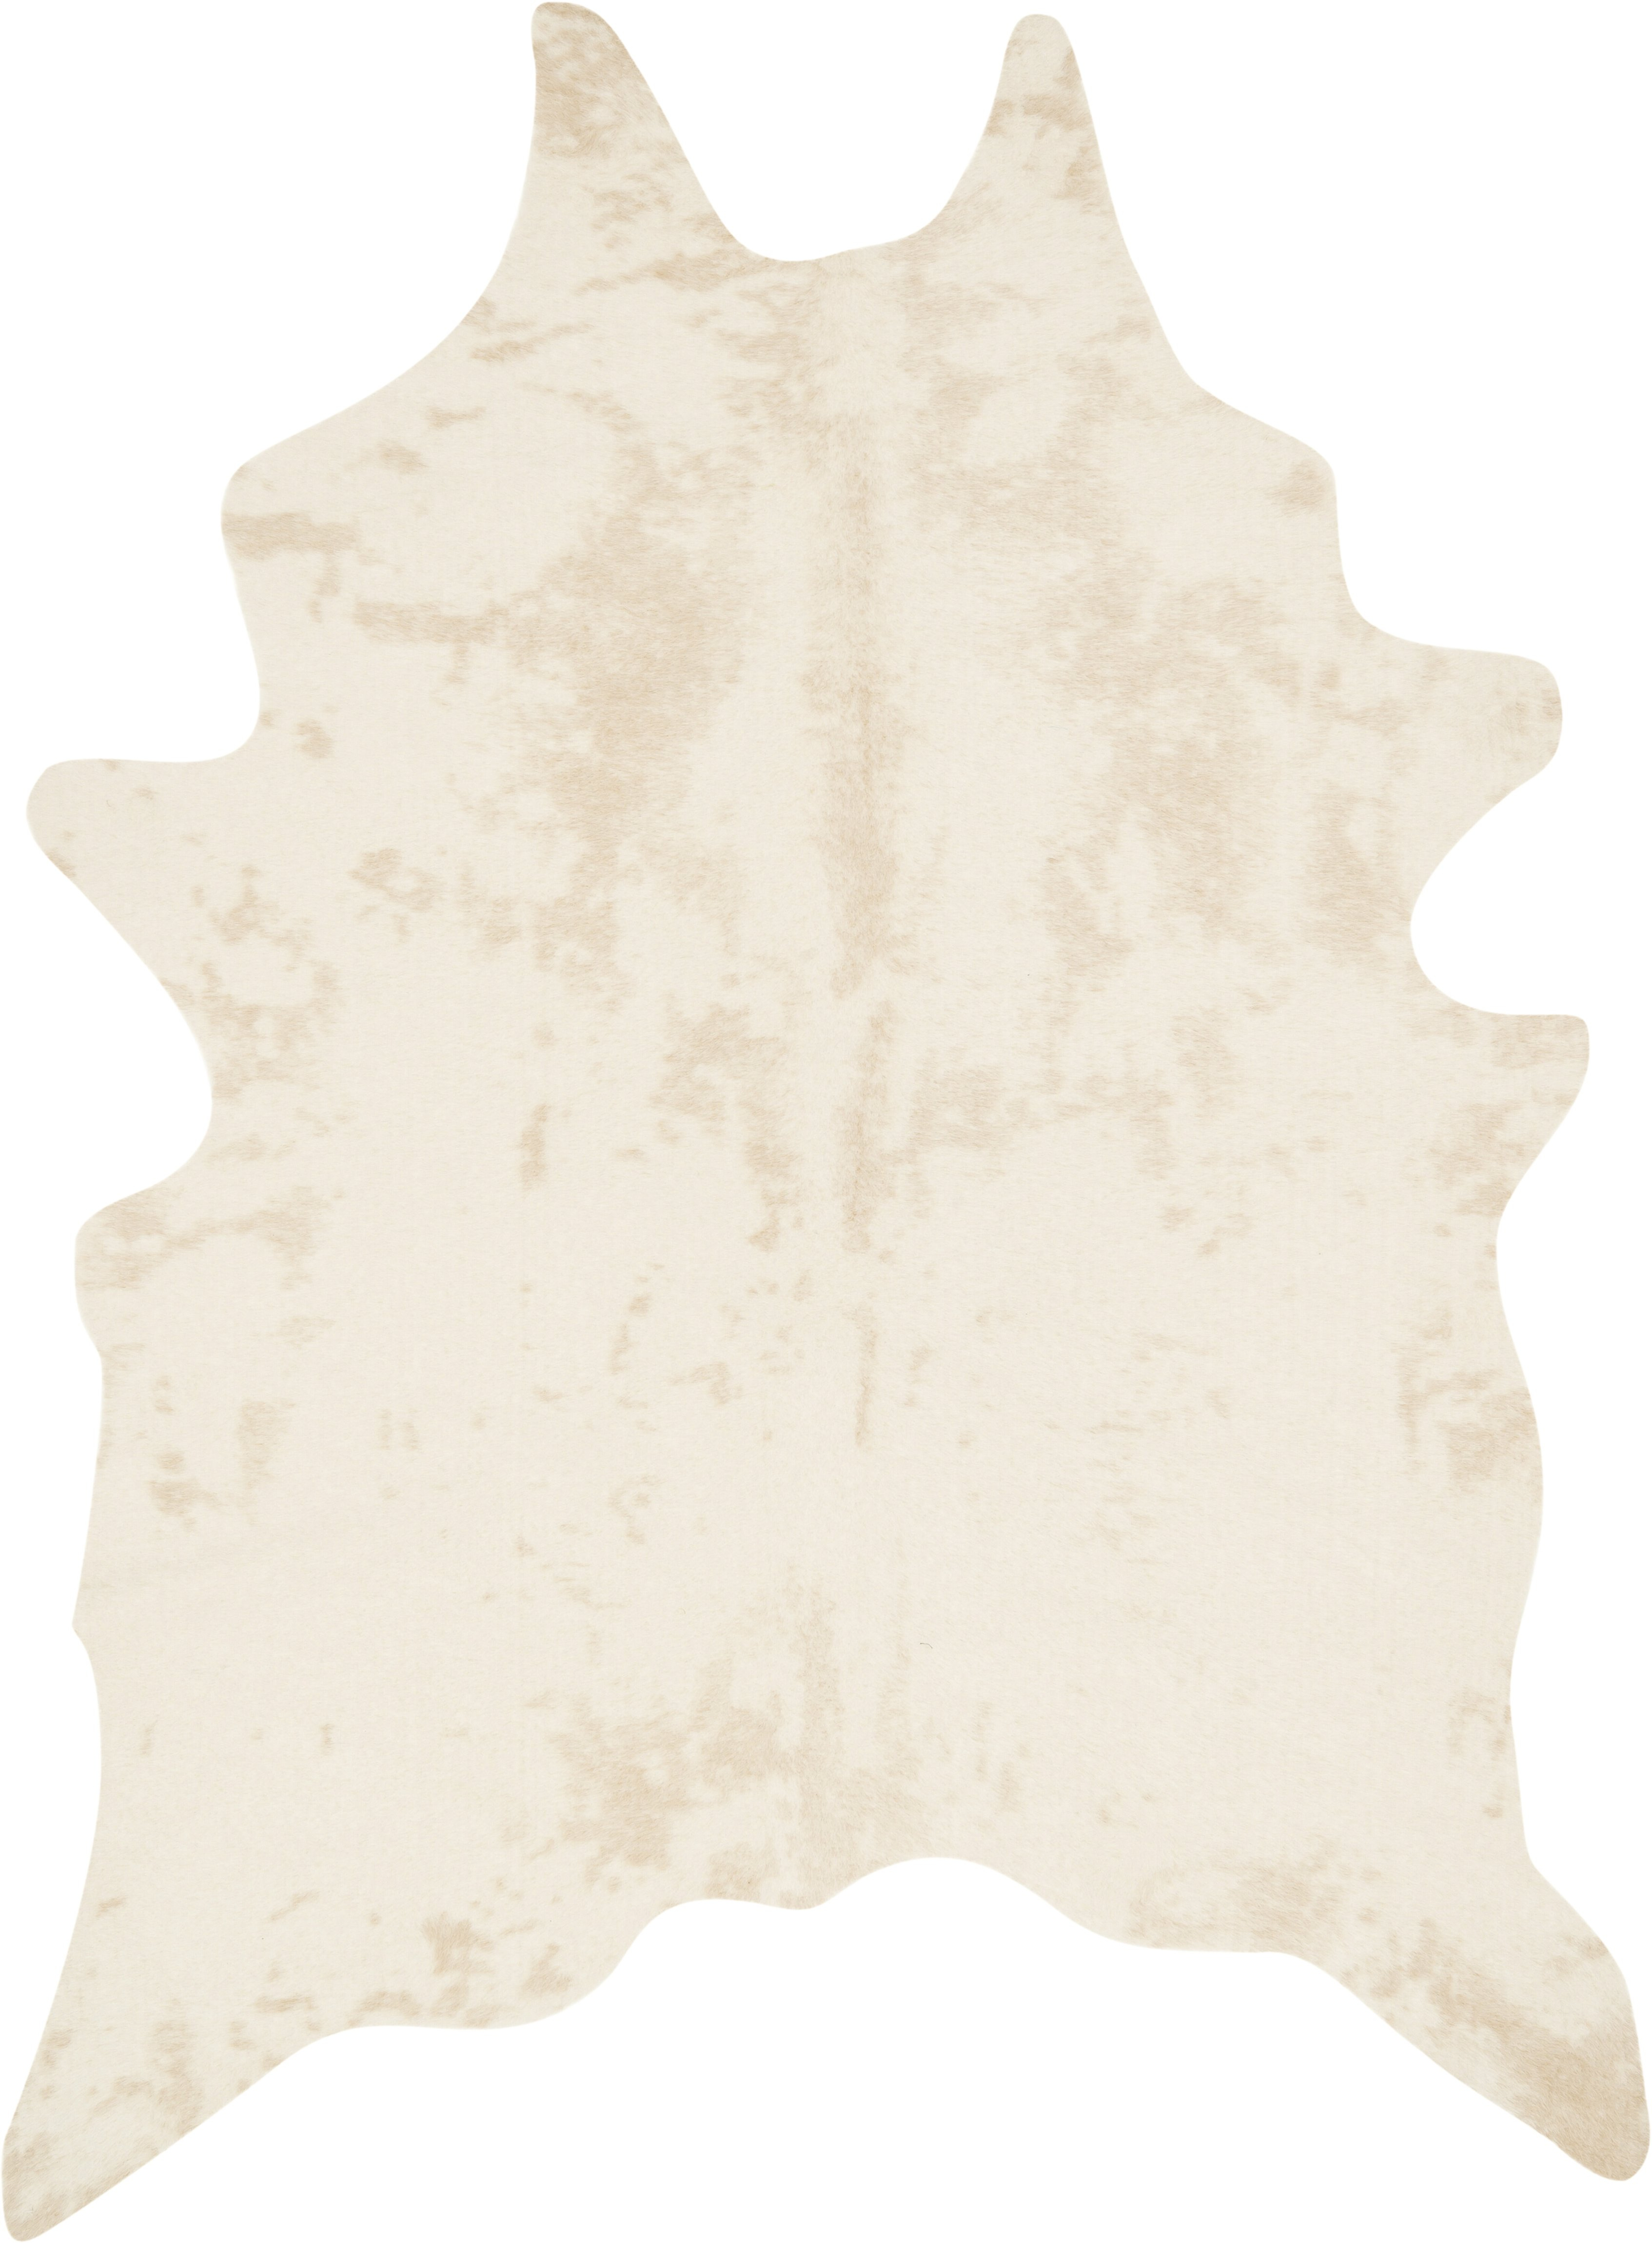 Grand Canyon Hide Rug, Ivory, 3'10" x 5' - Loloi II